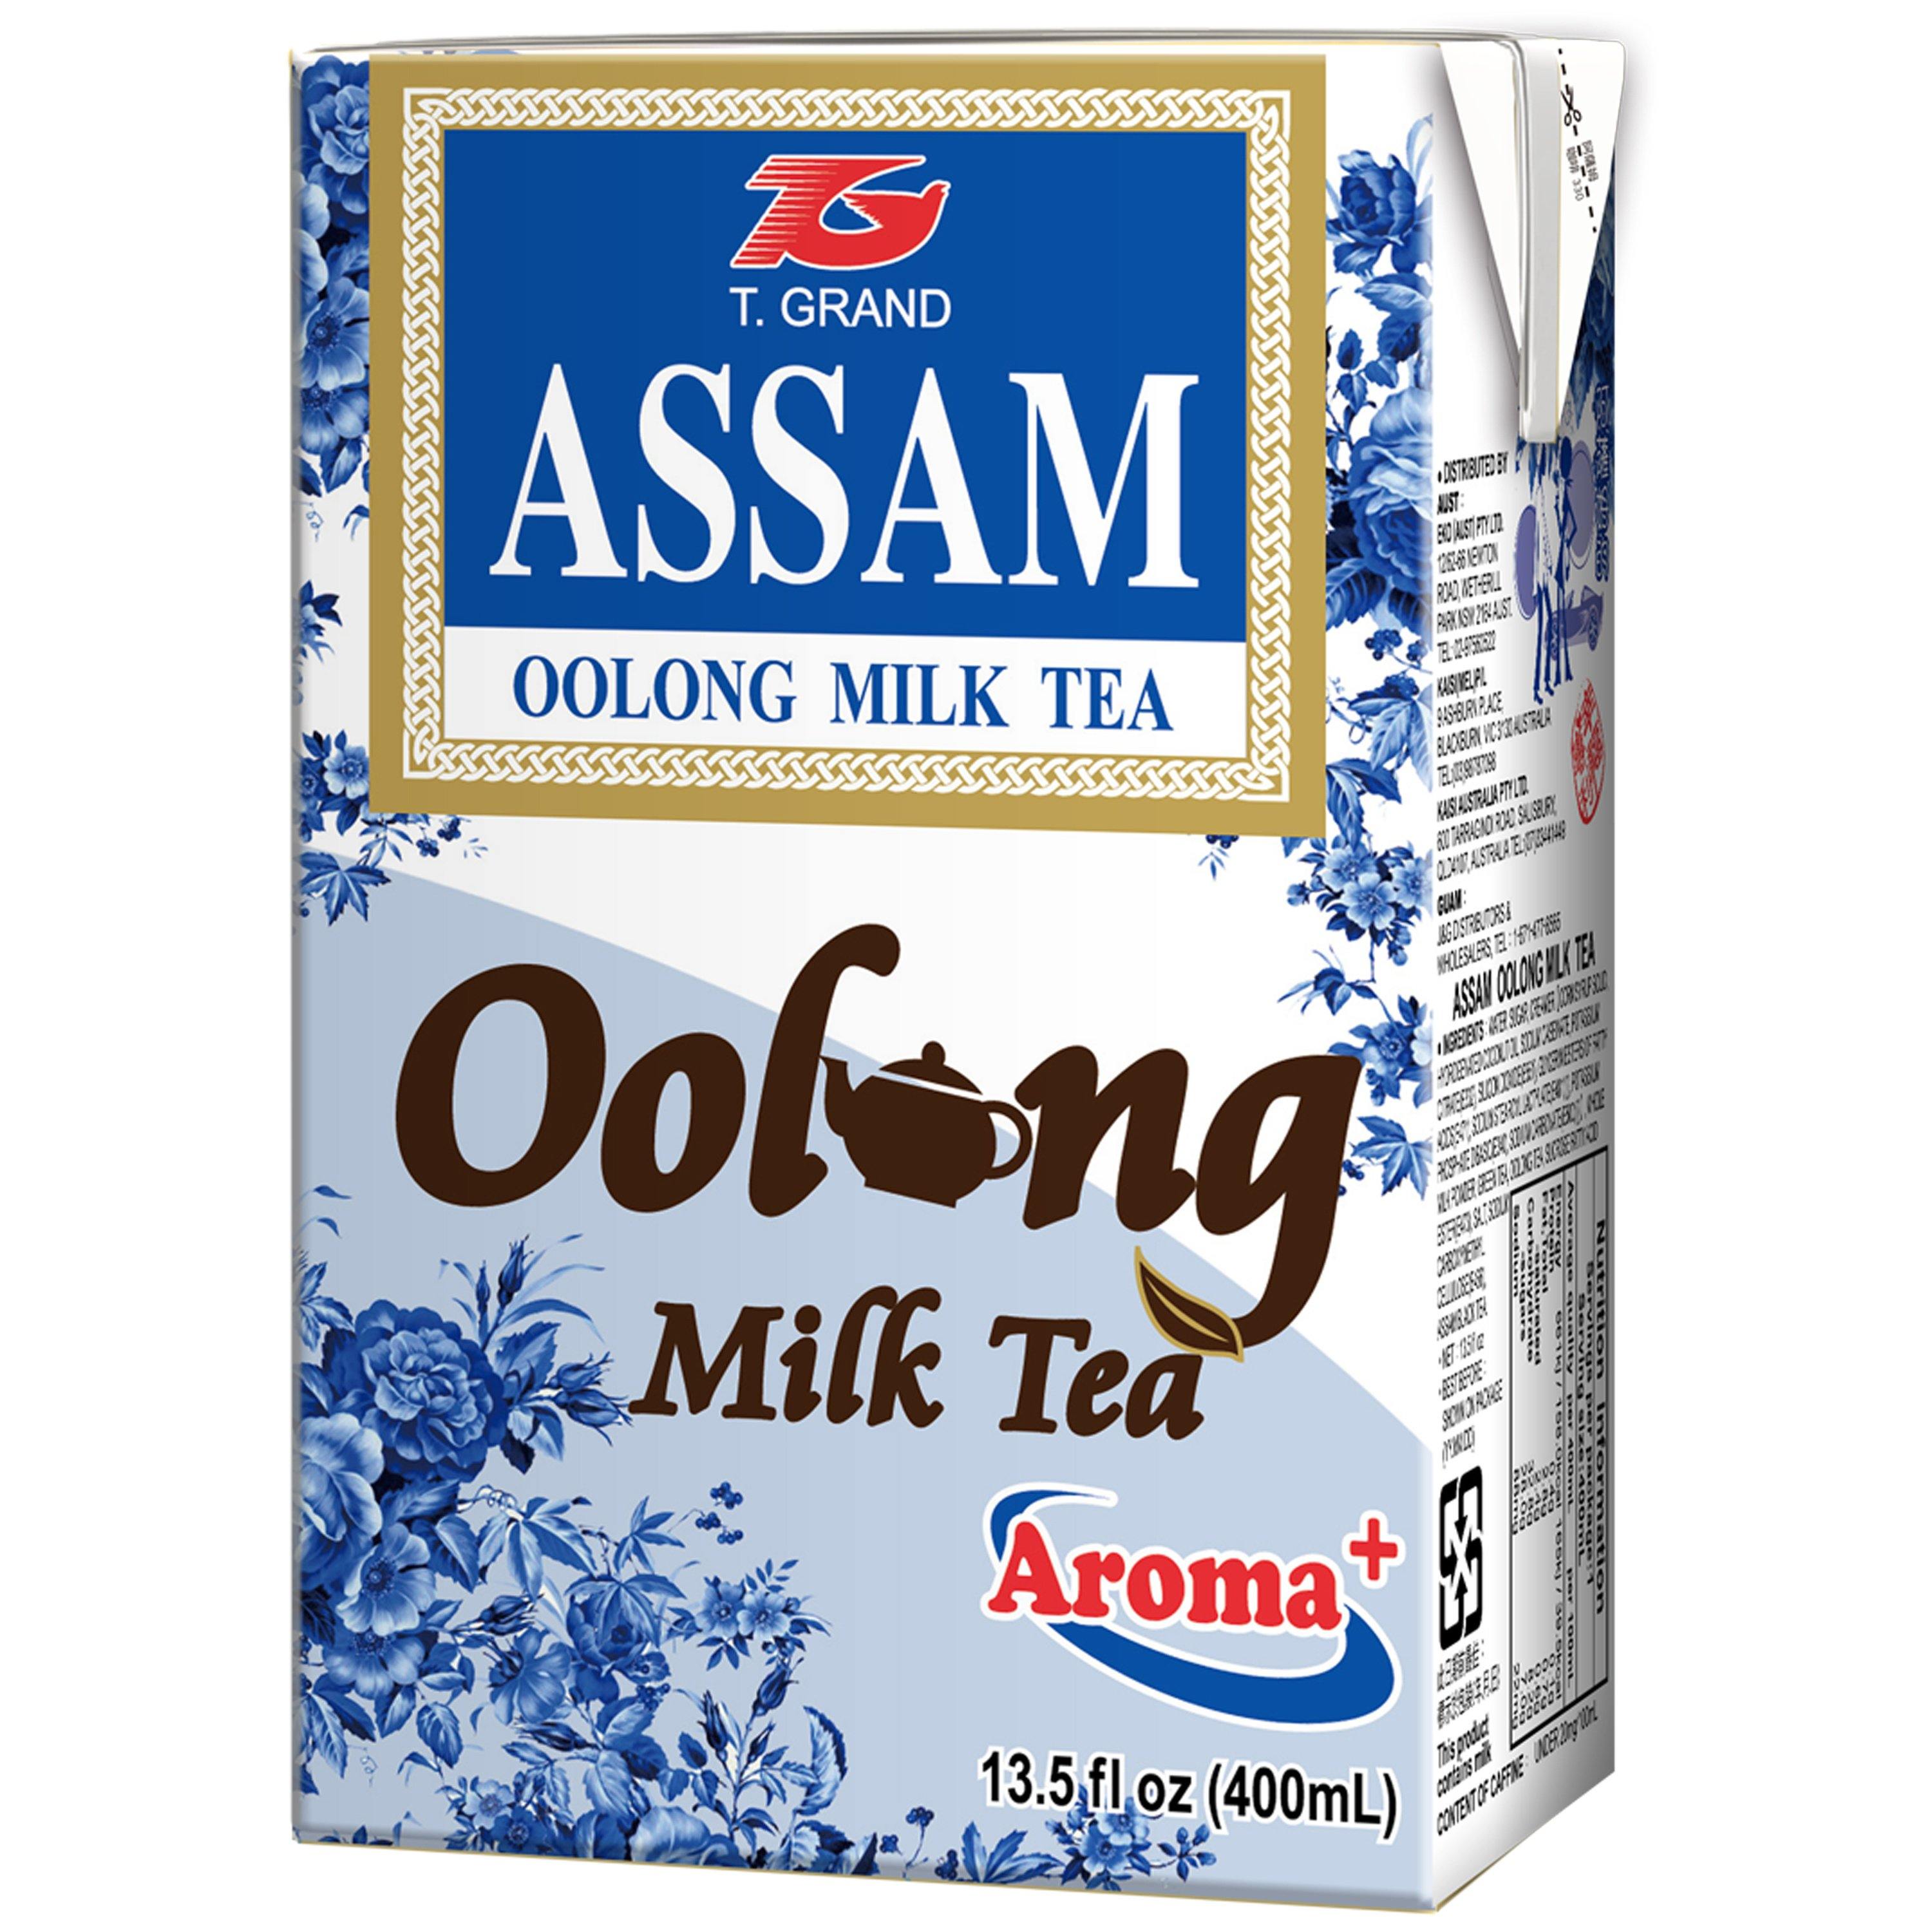 T-GRAND ASSAM OOLONG MILK TEA 400ML*6 - Premium Co.  Groceries 